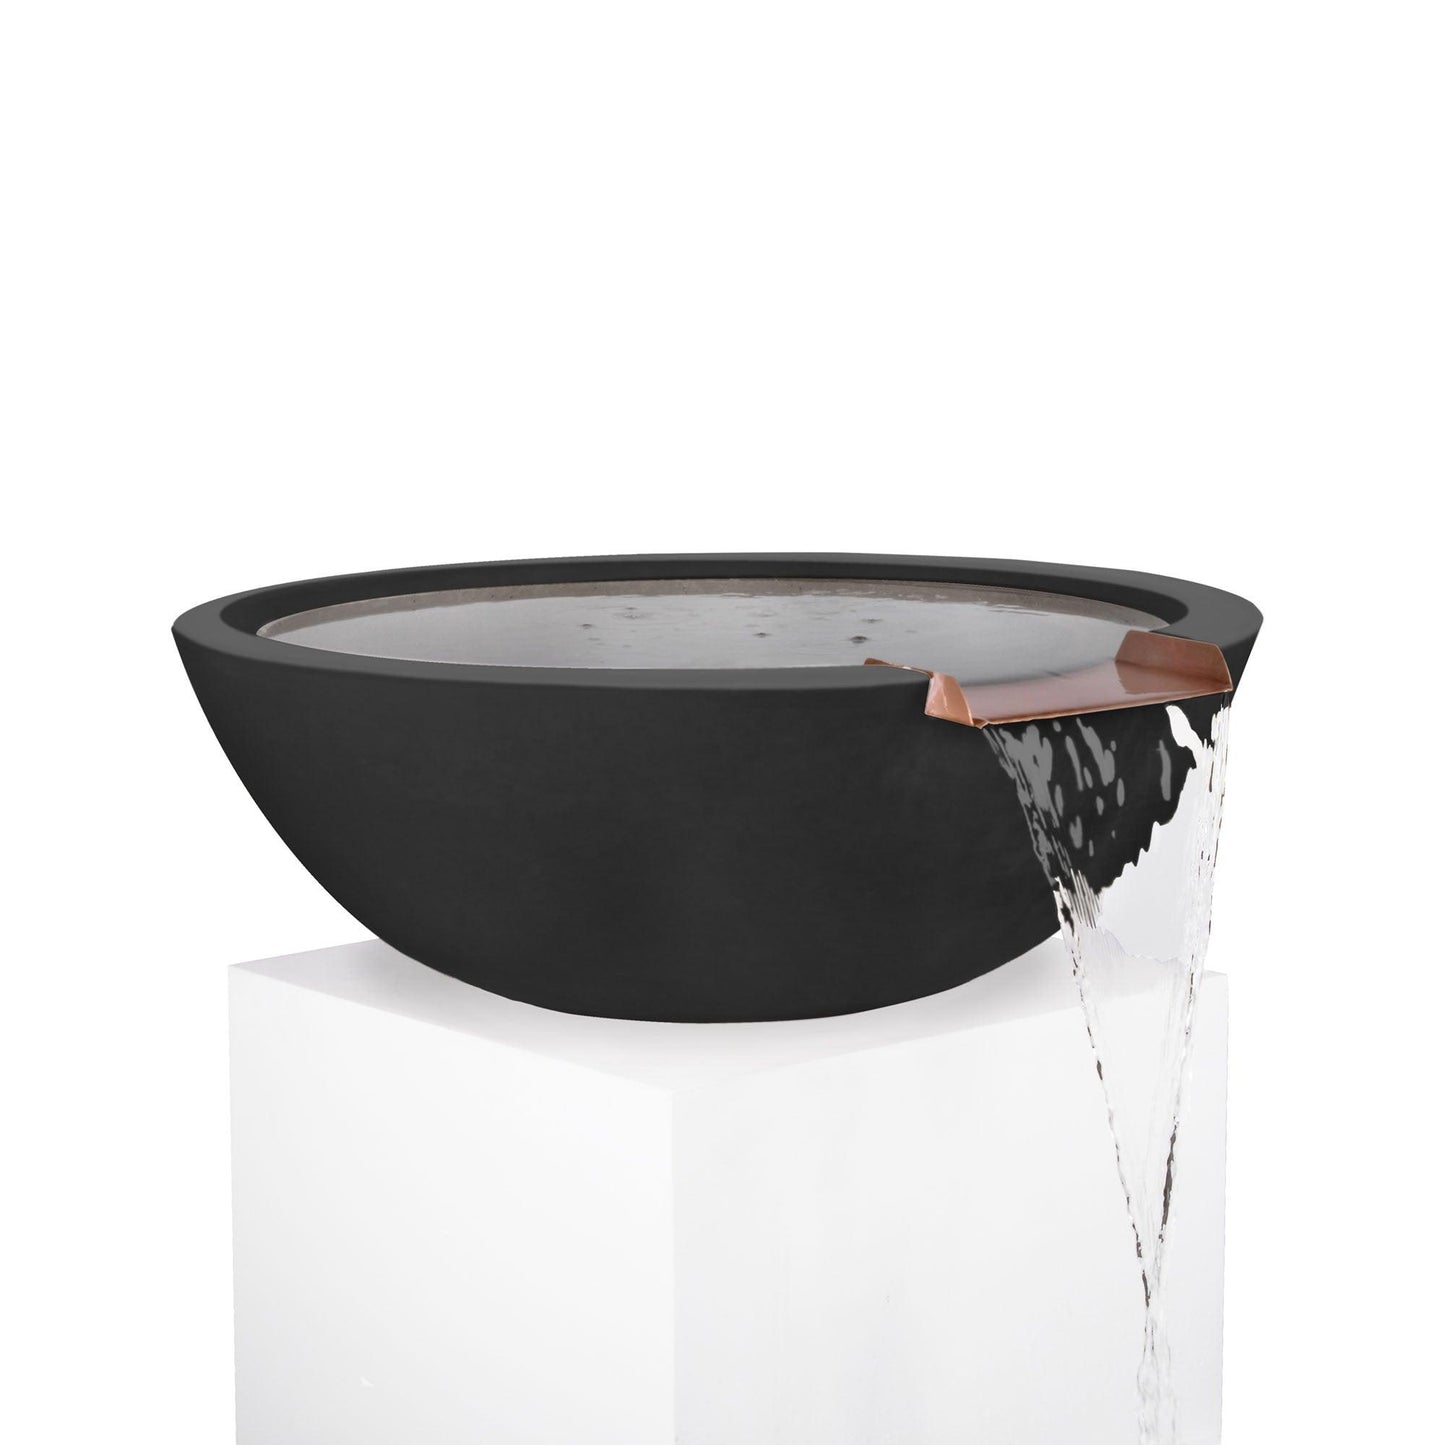 Sedona GFRC Water Bowl Black